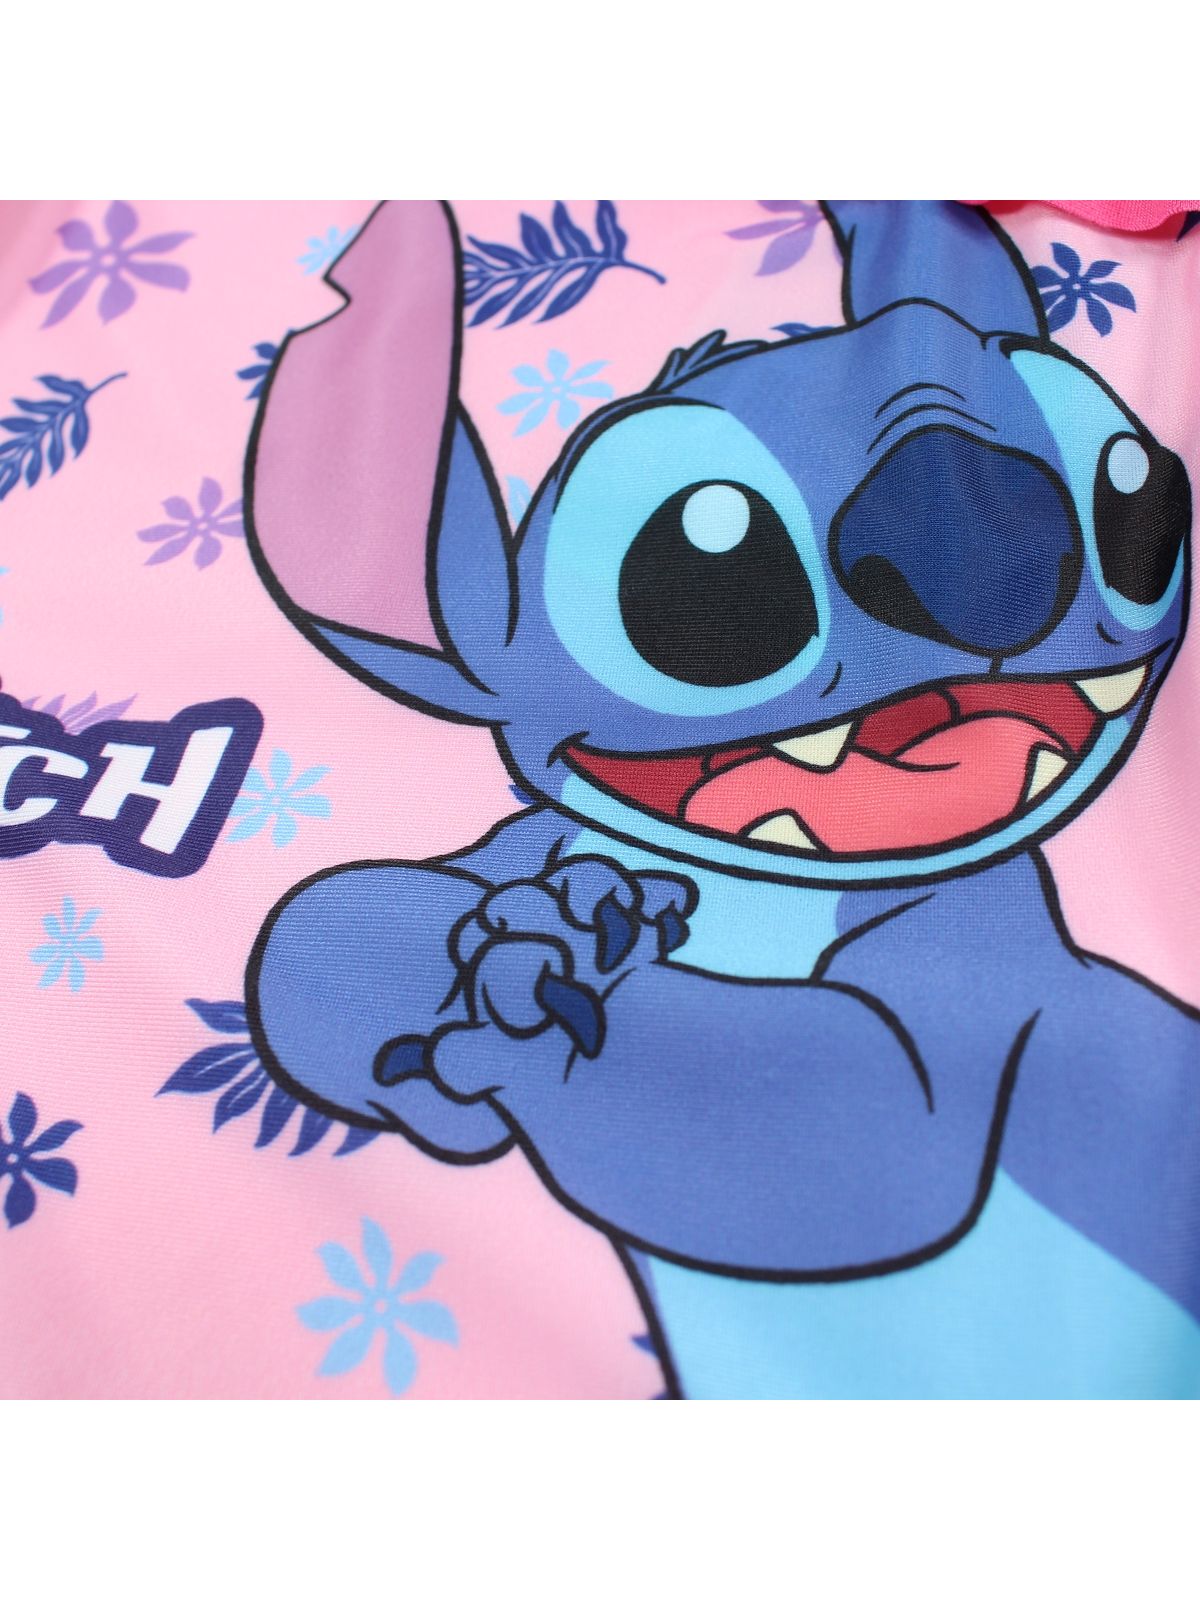 Lilo & Stitch swimsuit.